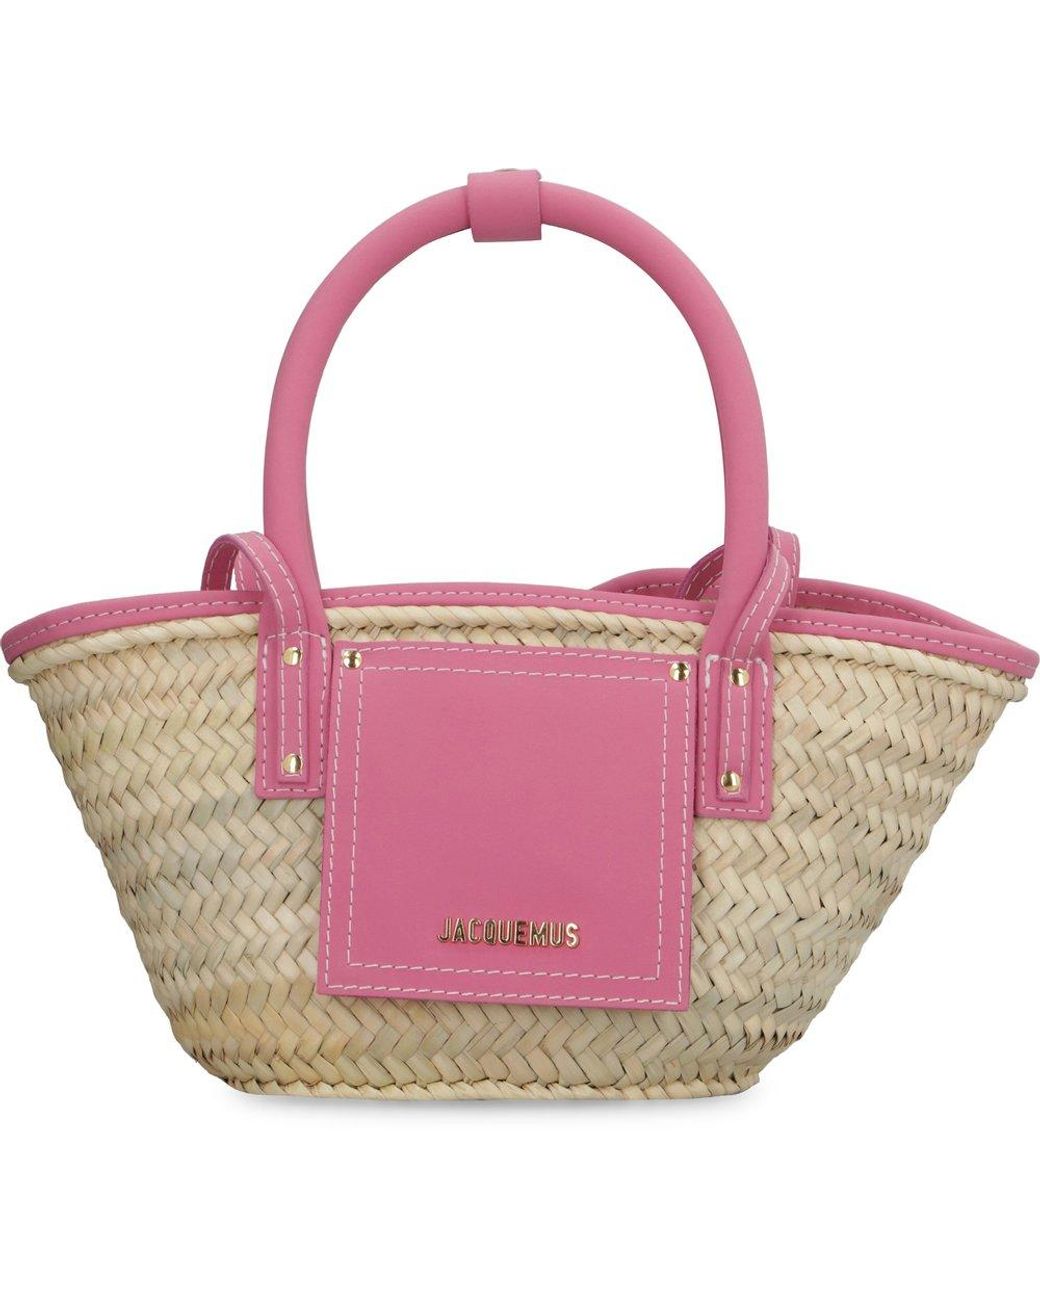 Jacquemus Le Petit Panier Soleil Tote Bag in Pink | Lyst